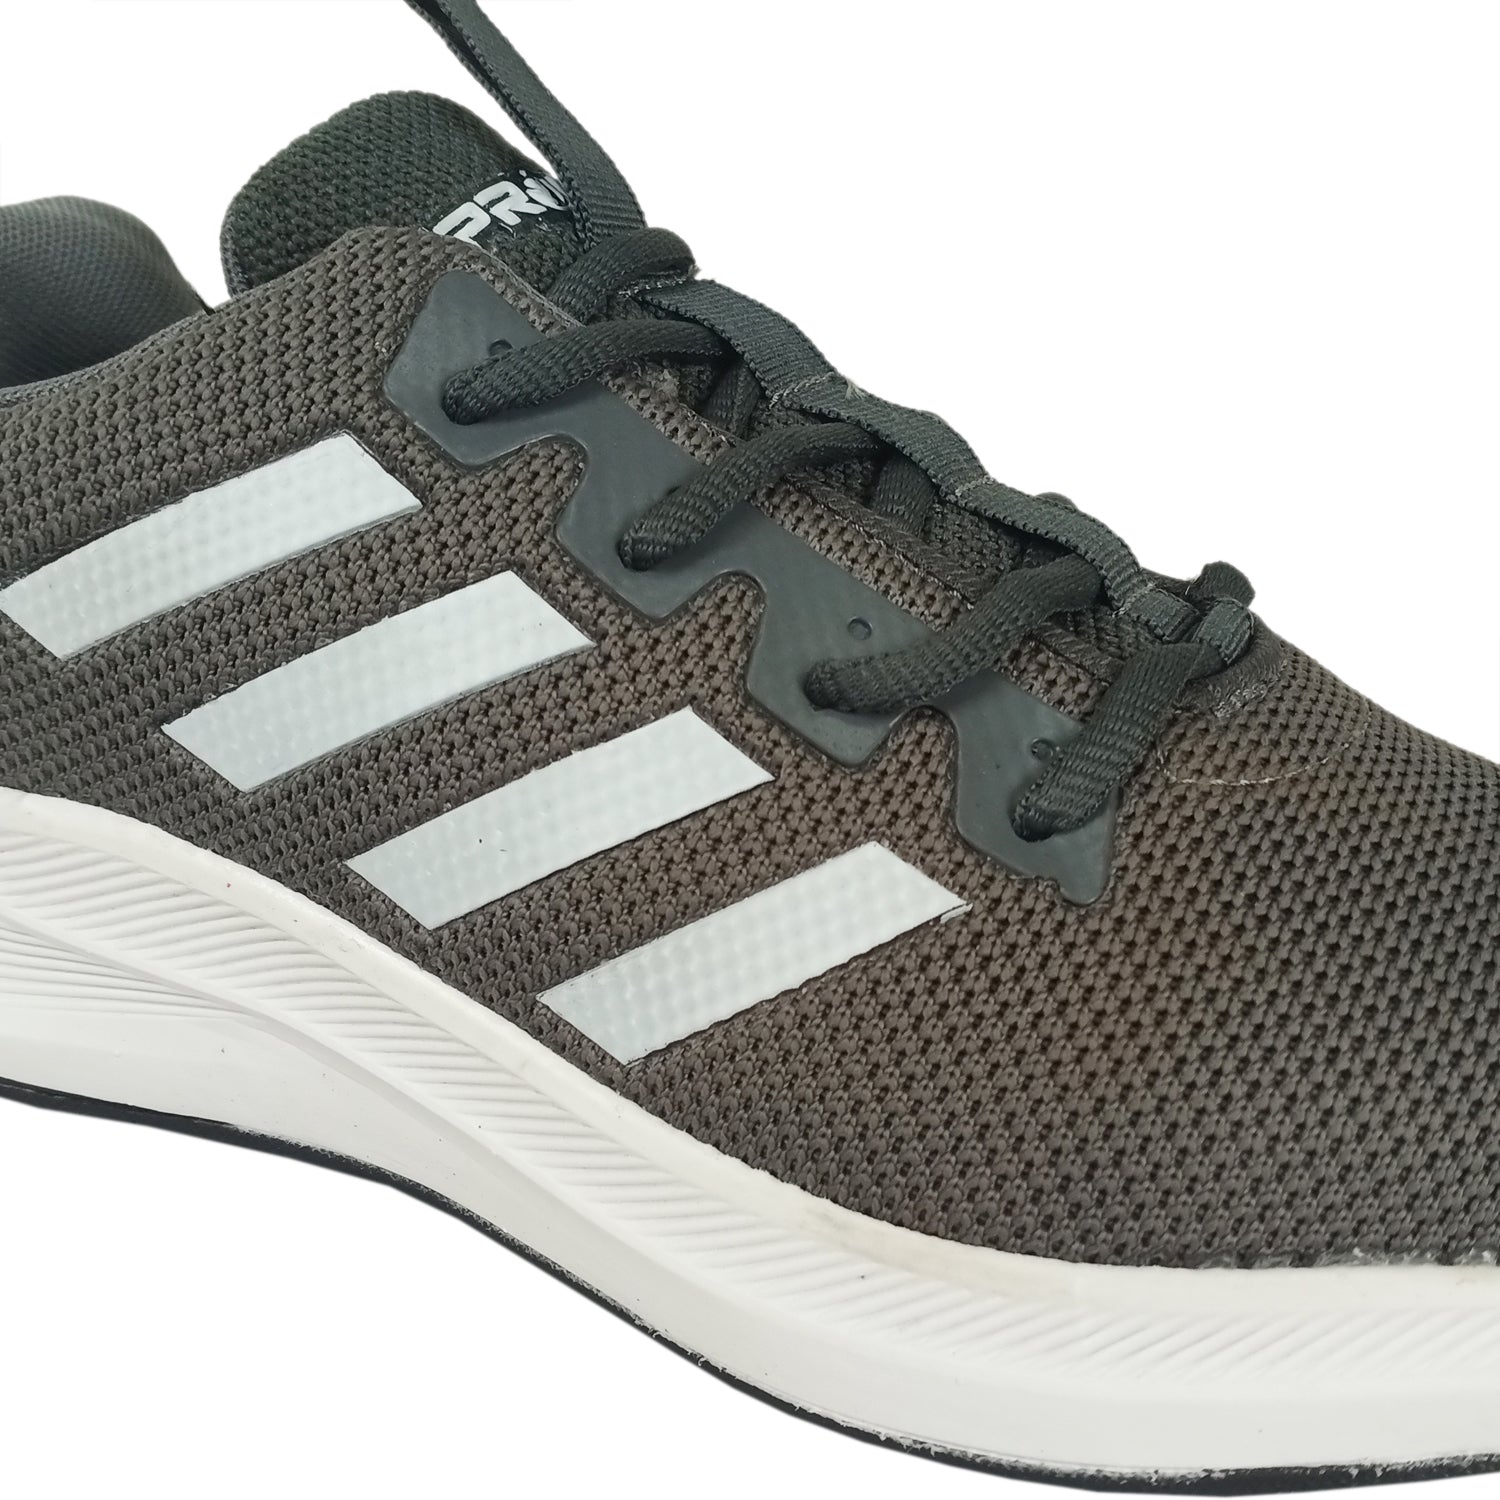 Prokick Jogger Running/Walking Shoes, Grey - Best Price online Prokicksports.com